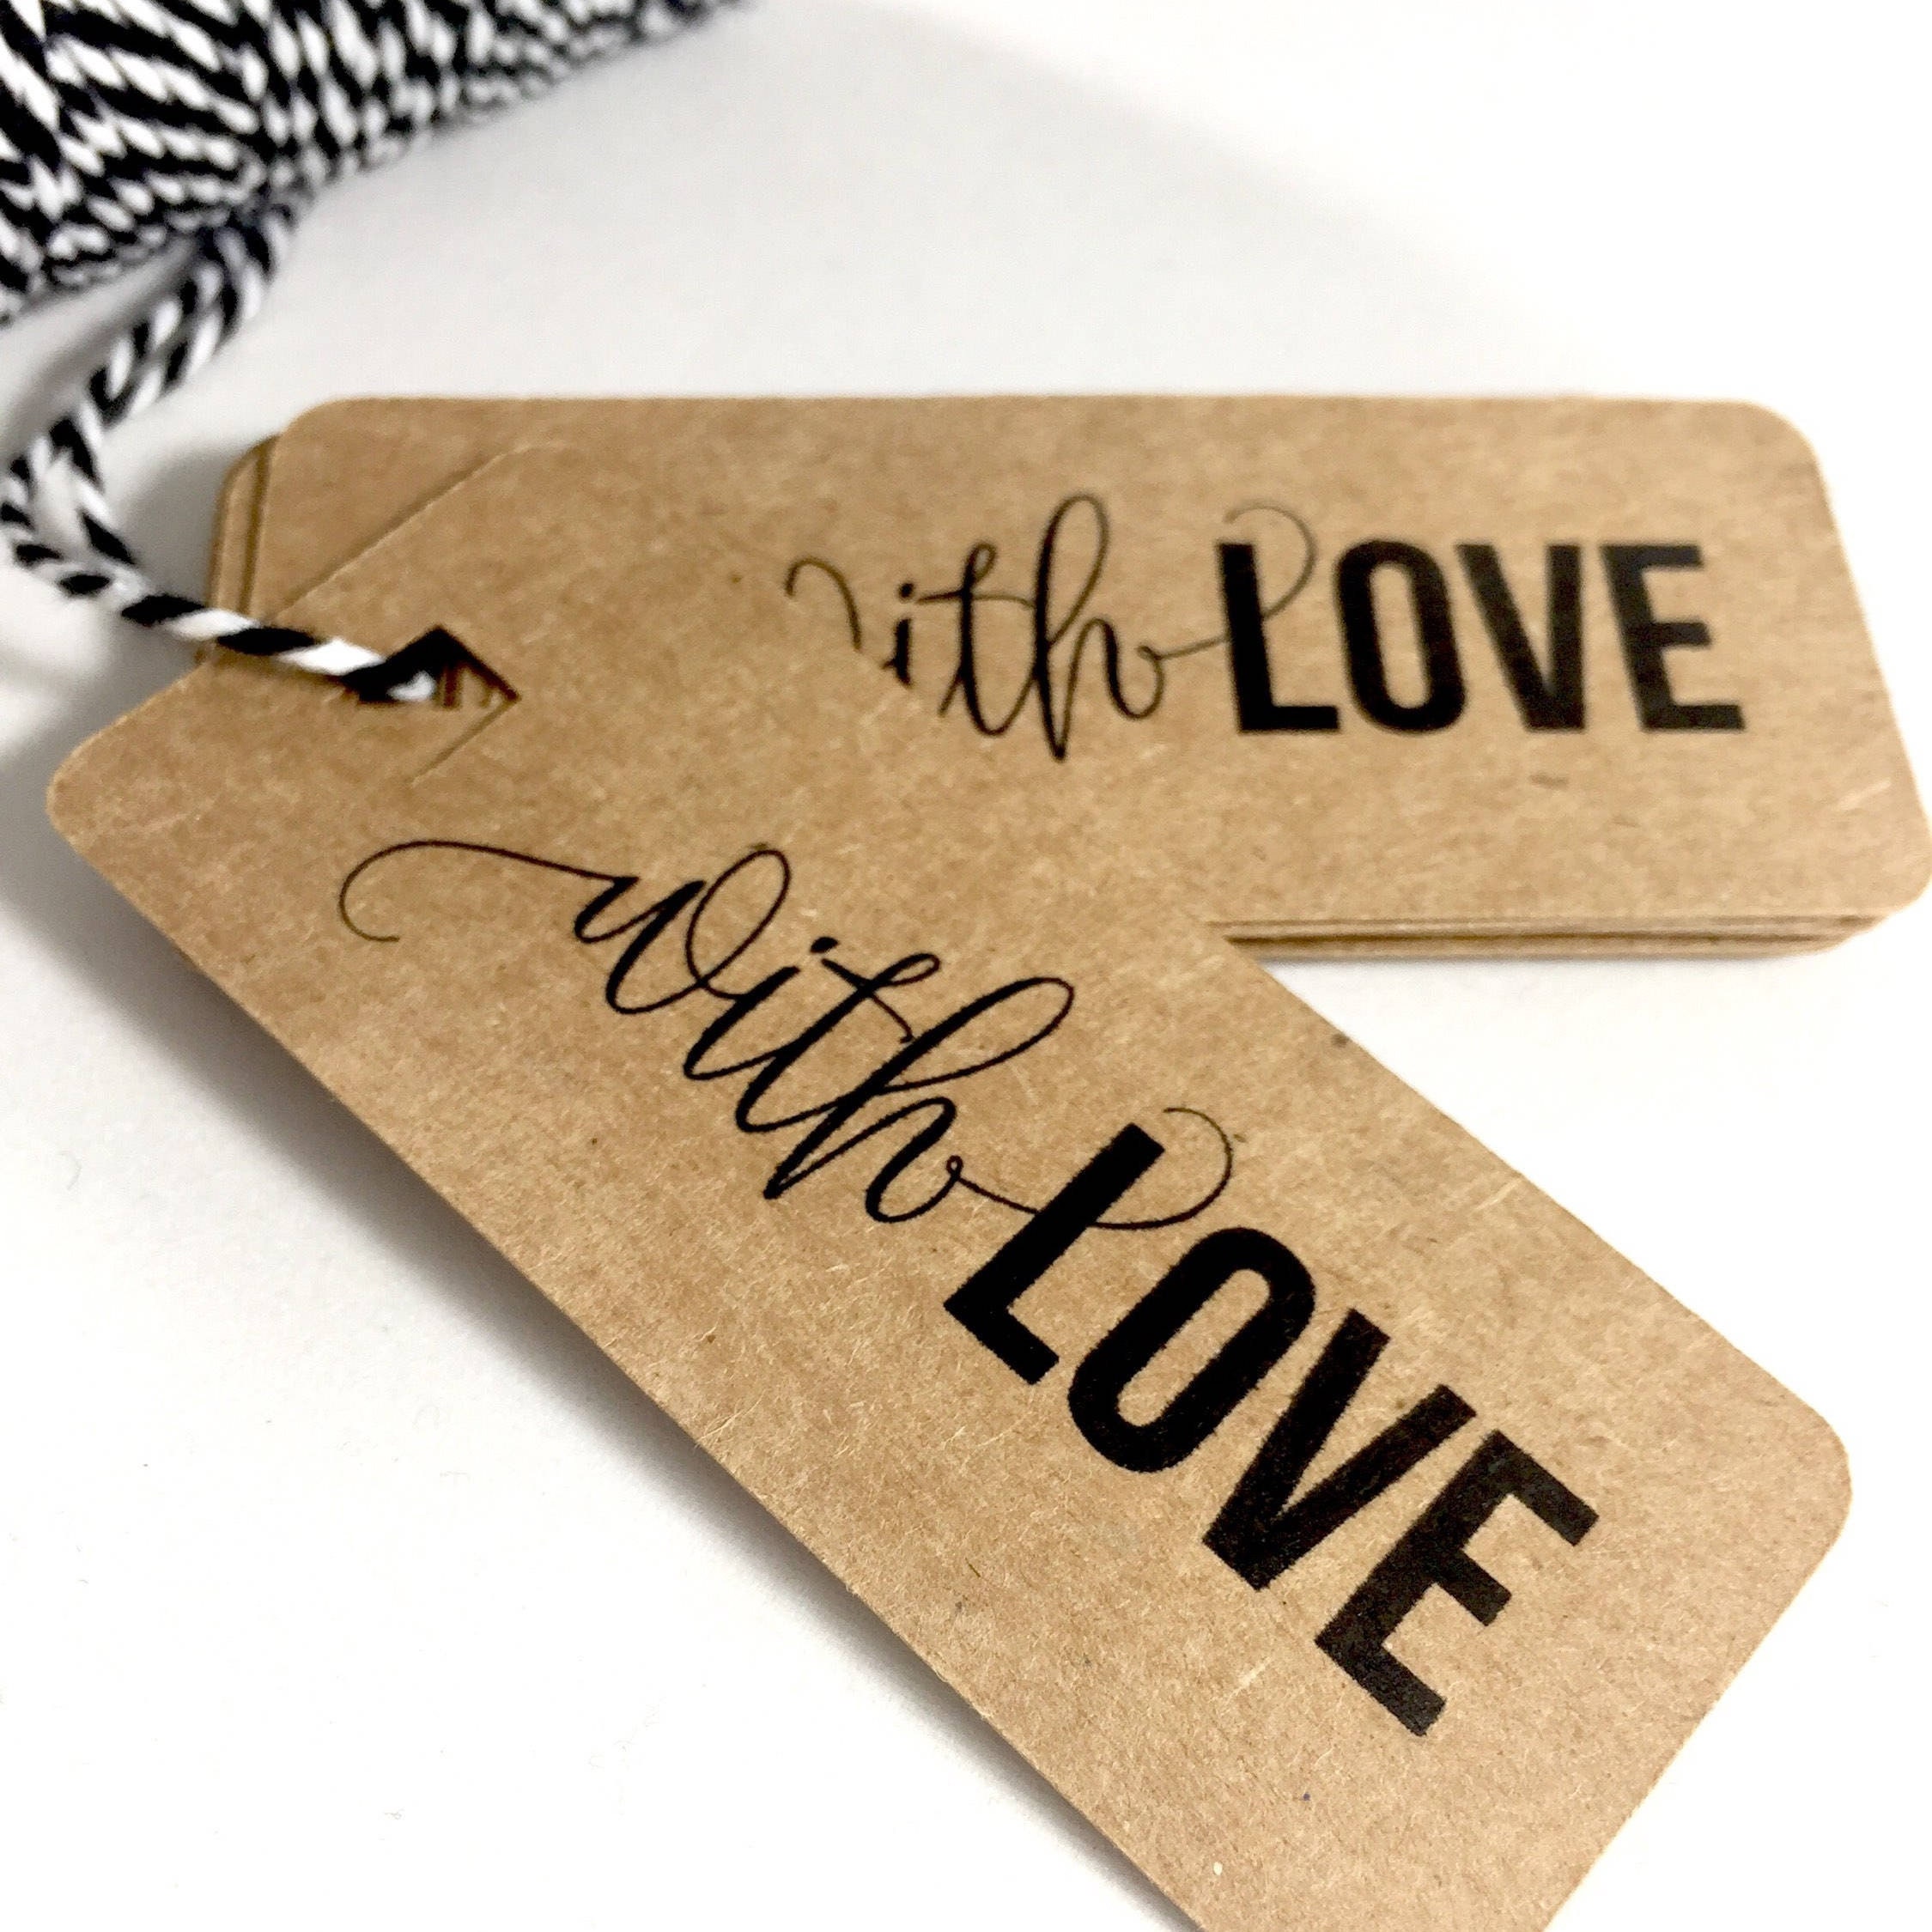 Handmade With Love Tags, Brown Kraft Tags, Made With Love Gift Tags, Favor  Tags, Merchandise Tags, Packaging Tags, Christmas Handmade Tags